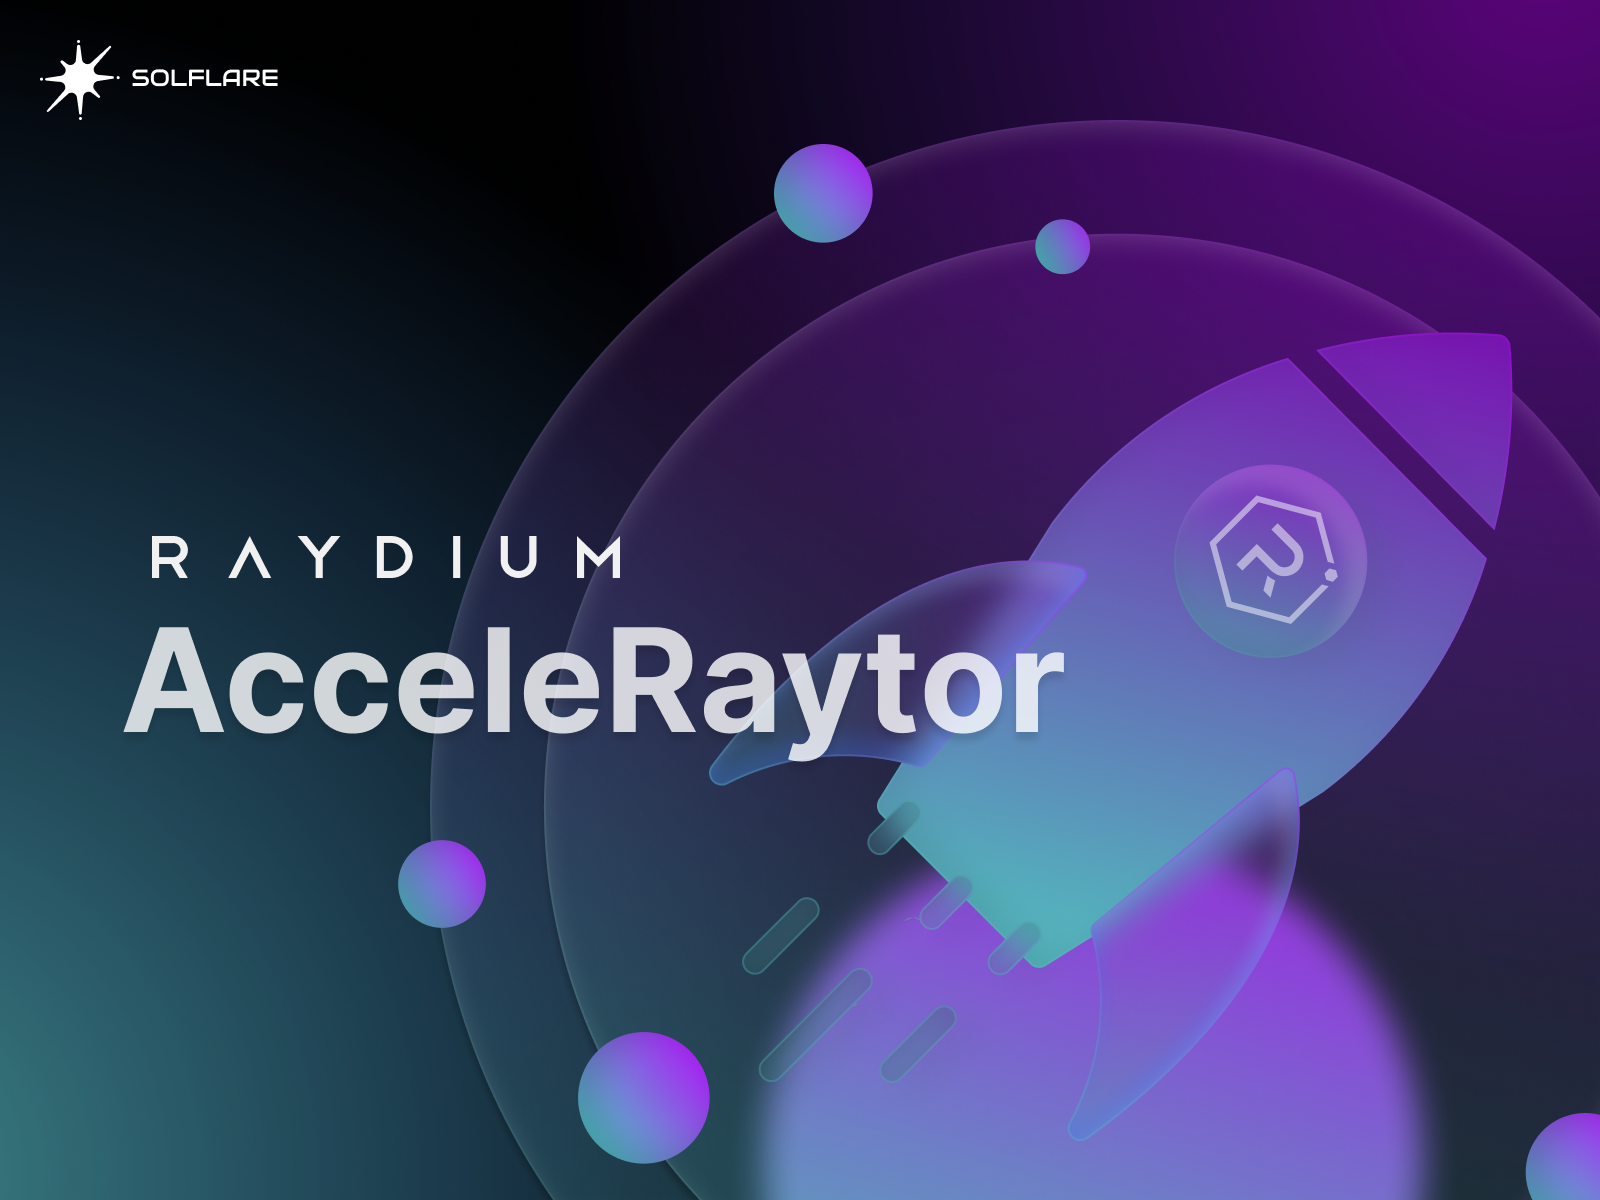 Raydium’s AcceleRaytor